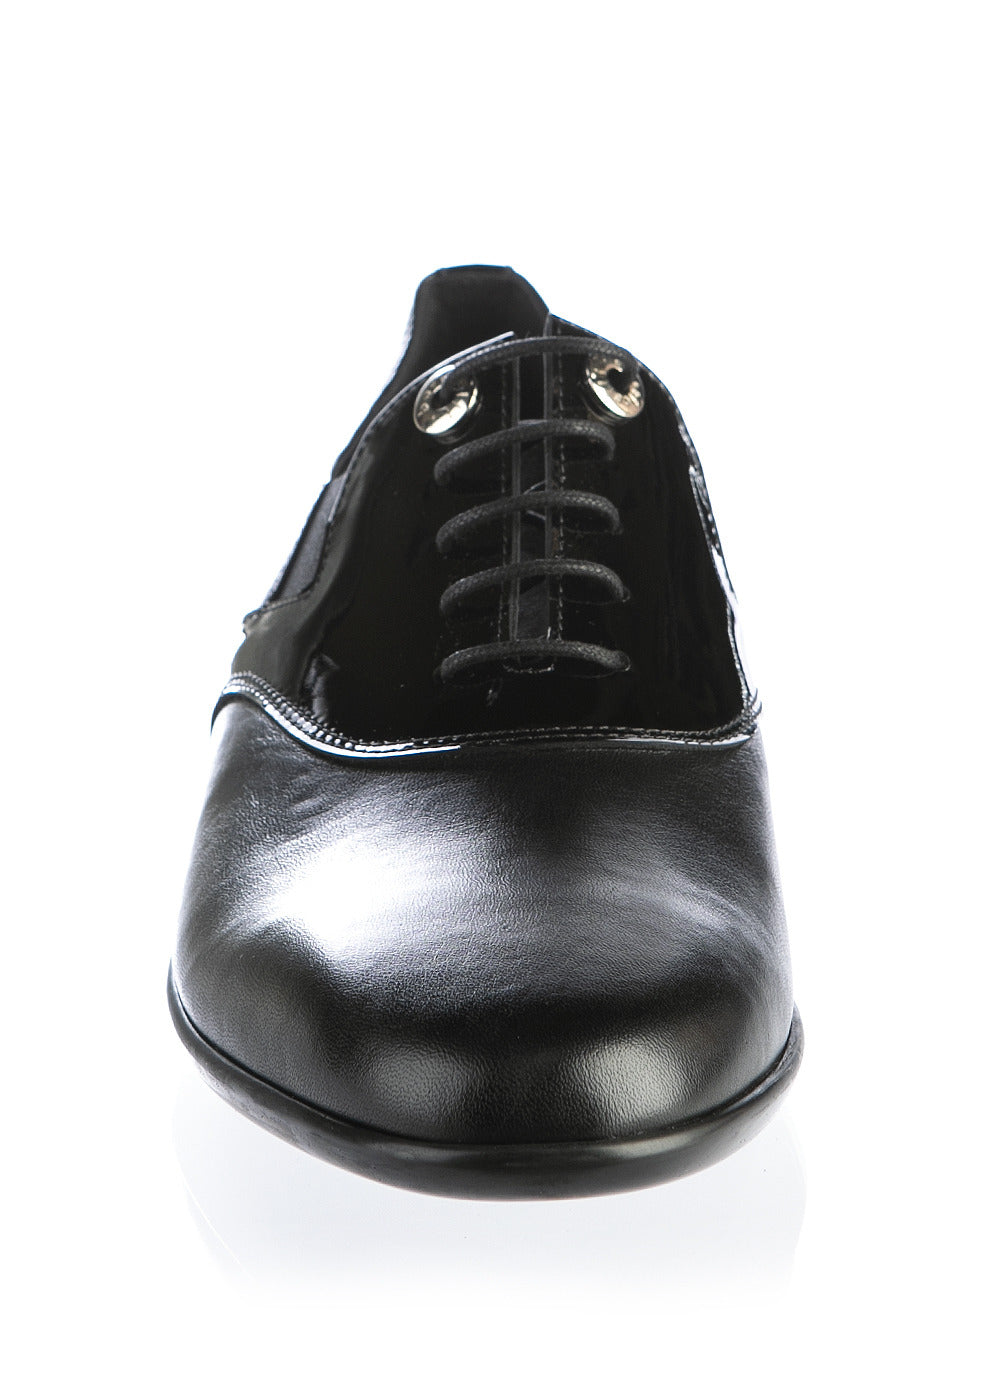 6802 Roberto Botticelli Shoes / Black